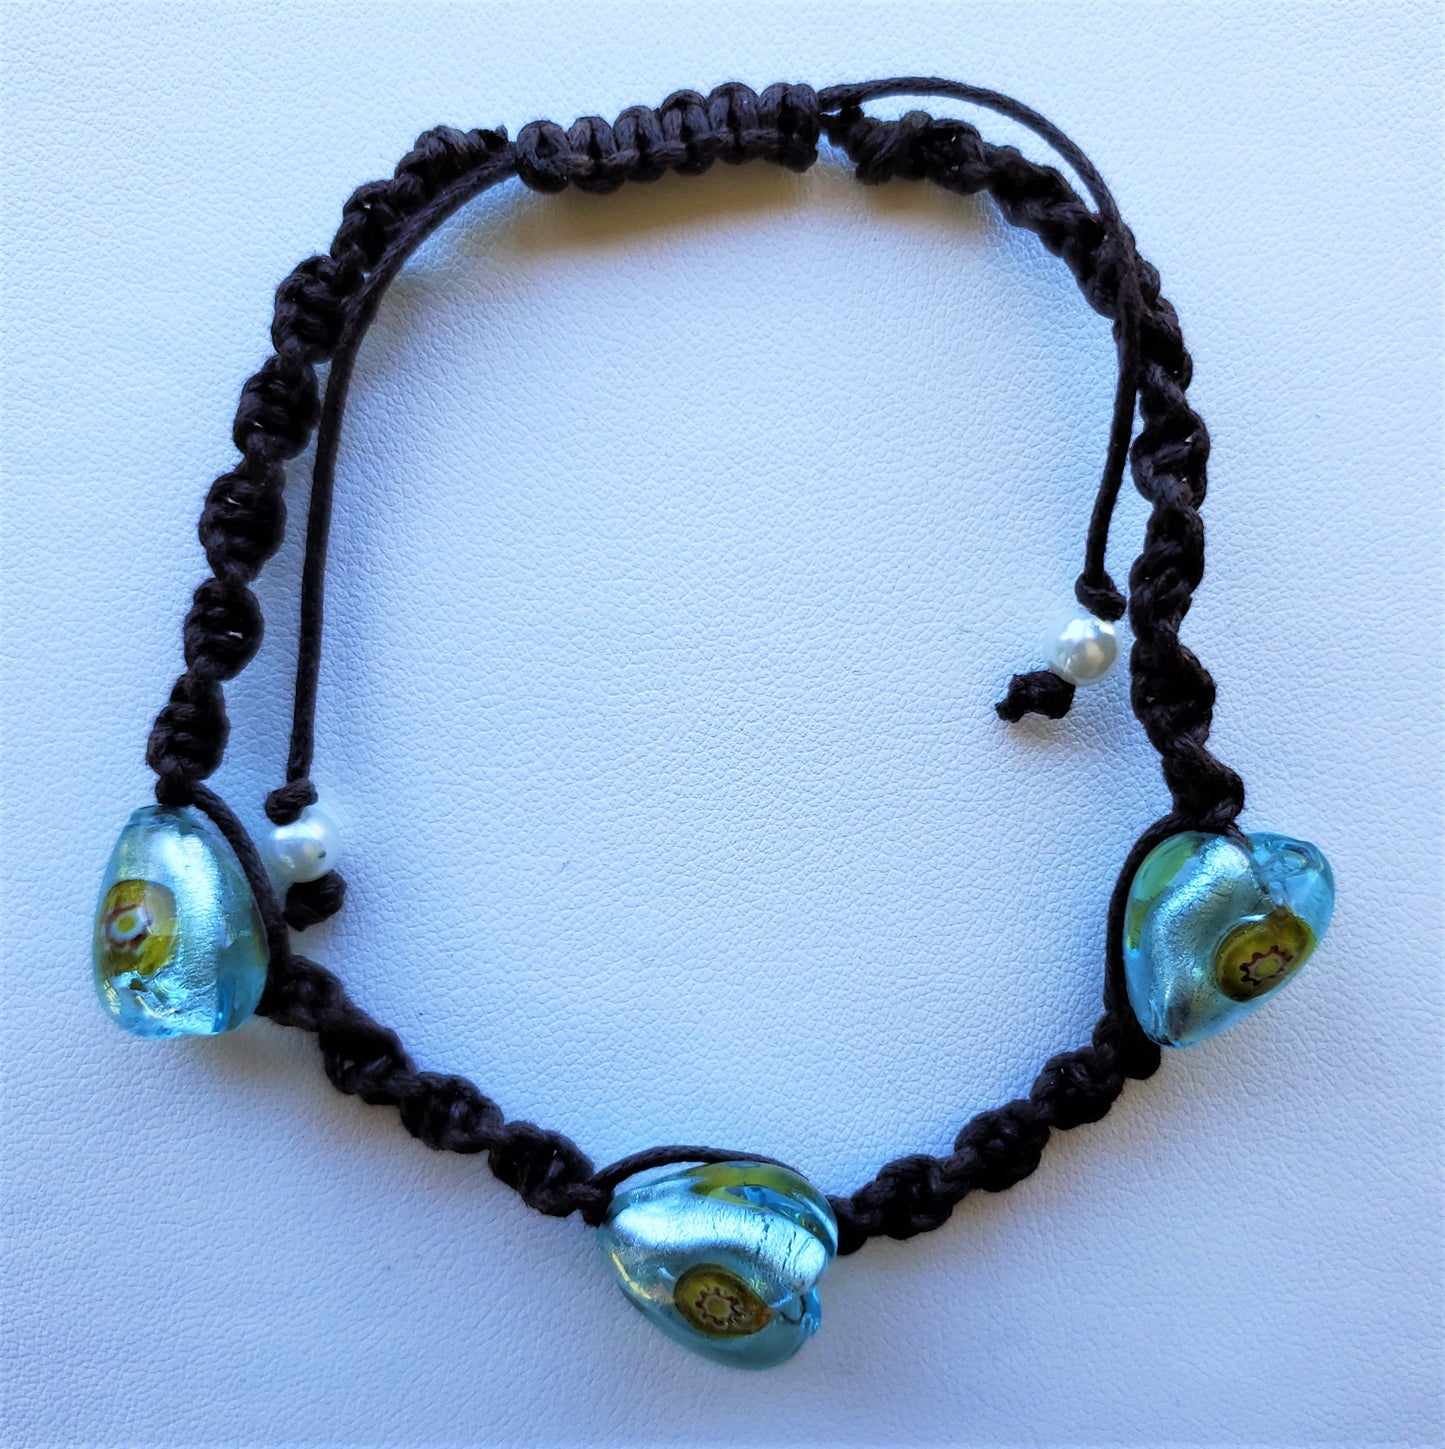 Hand Braided Macramé & Recycled Glass Bead Bracelet  - Aqua Blue Hearts